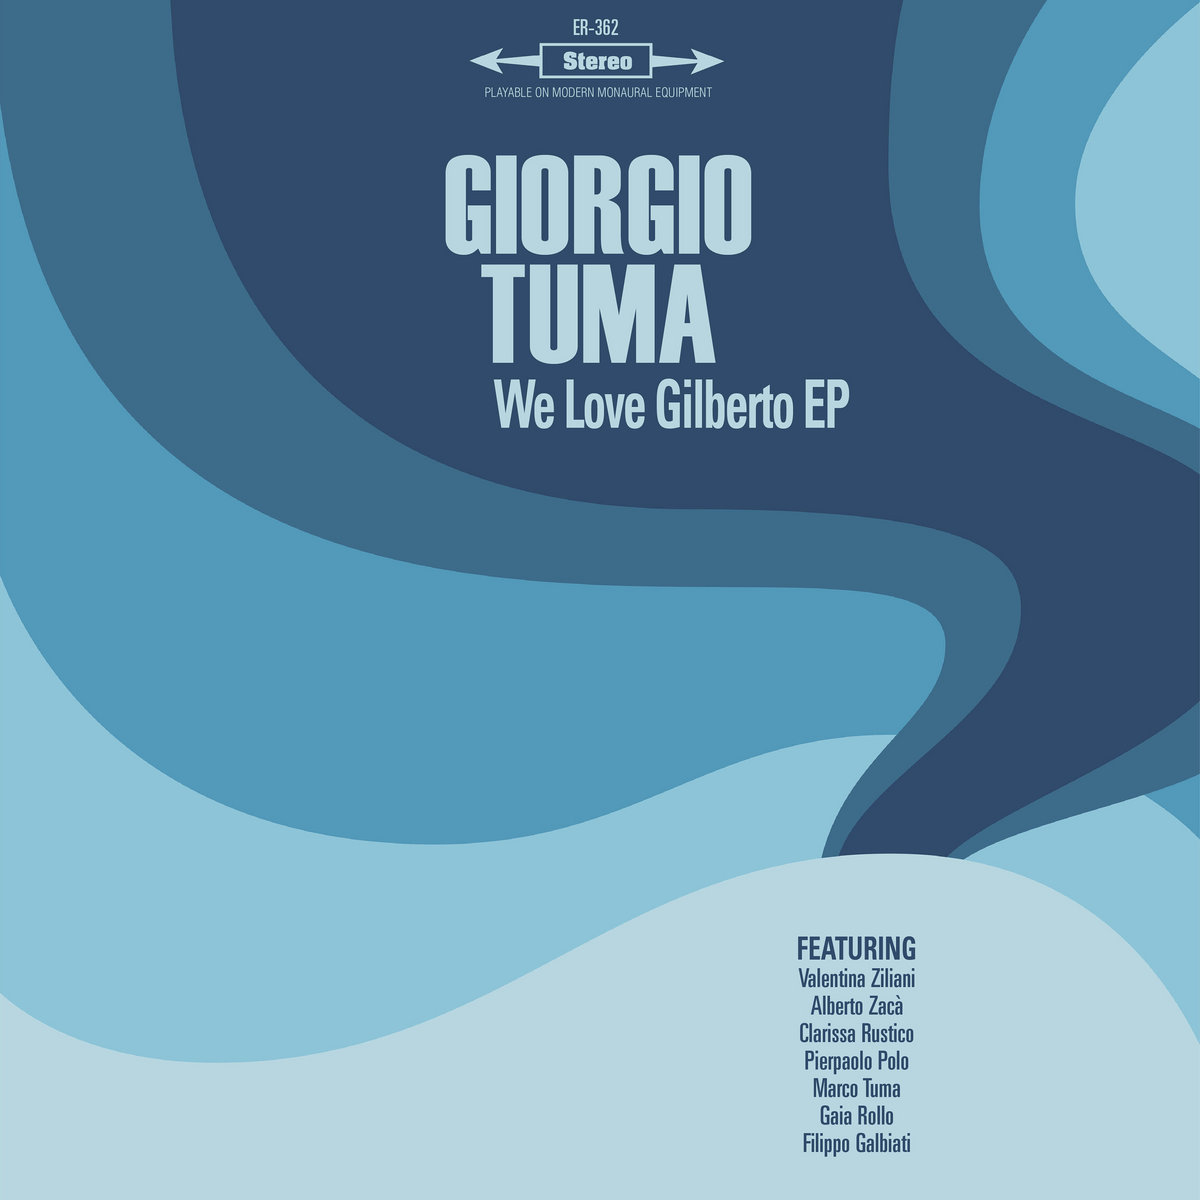 Giorgio Tuma "We love gilberto" EP